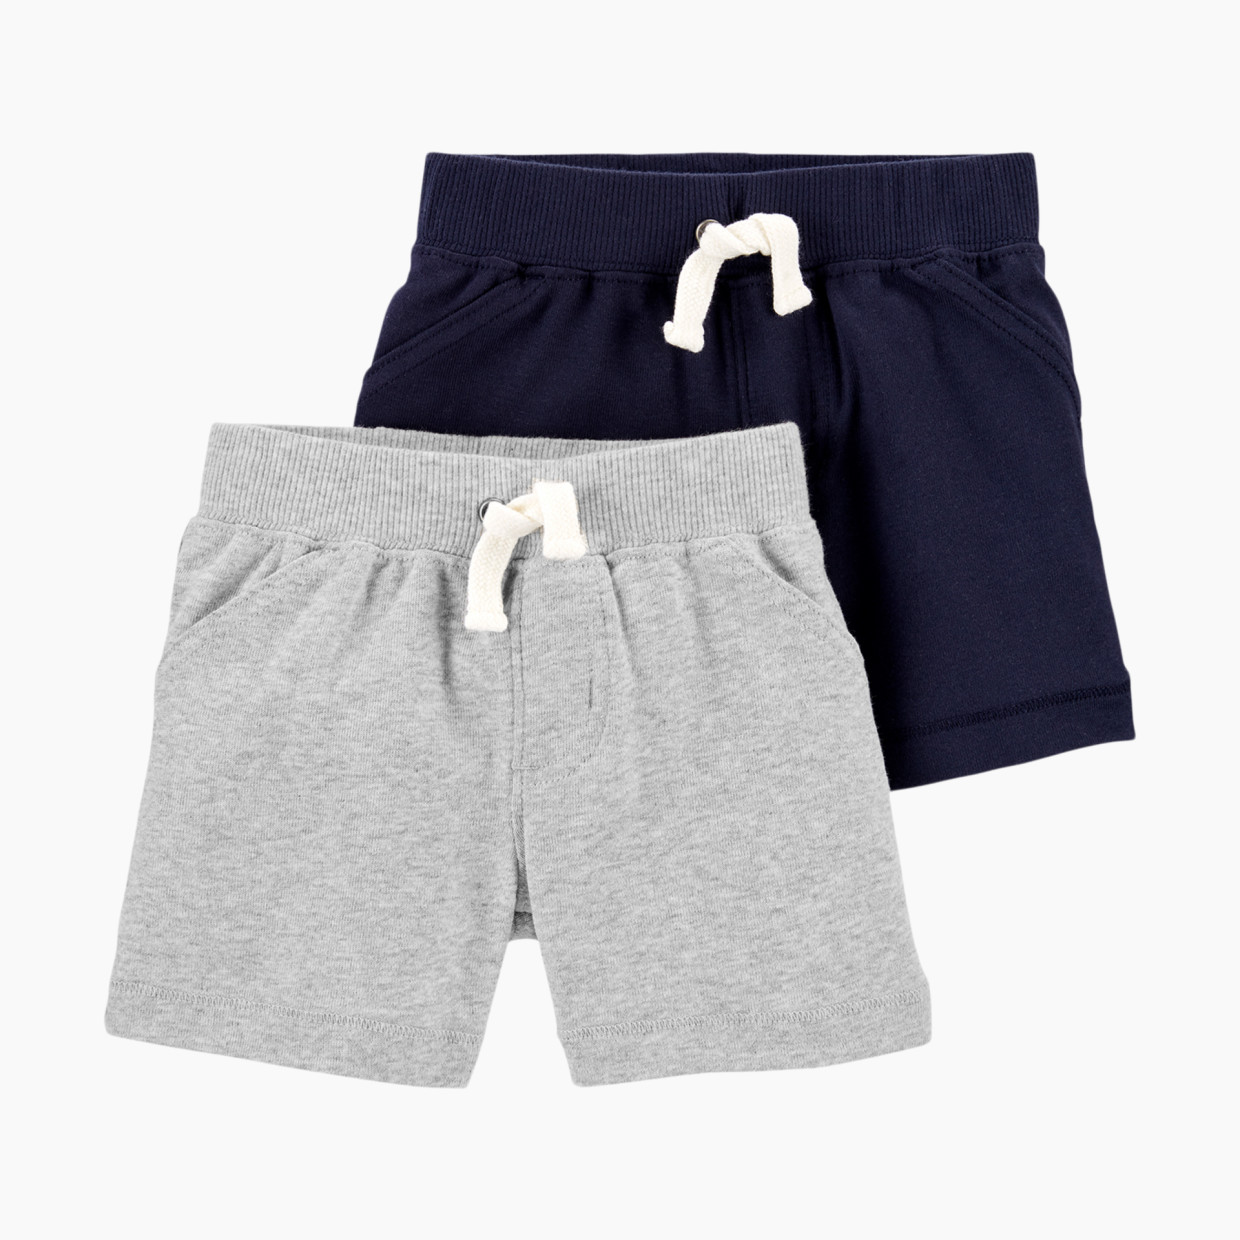 Carter's Drawstring Shorts (2 Pack) - Navy/Grey, 3 M.